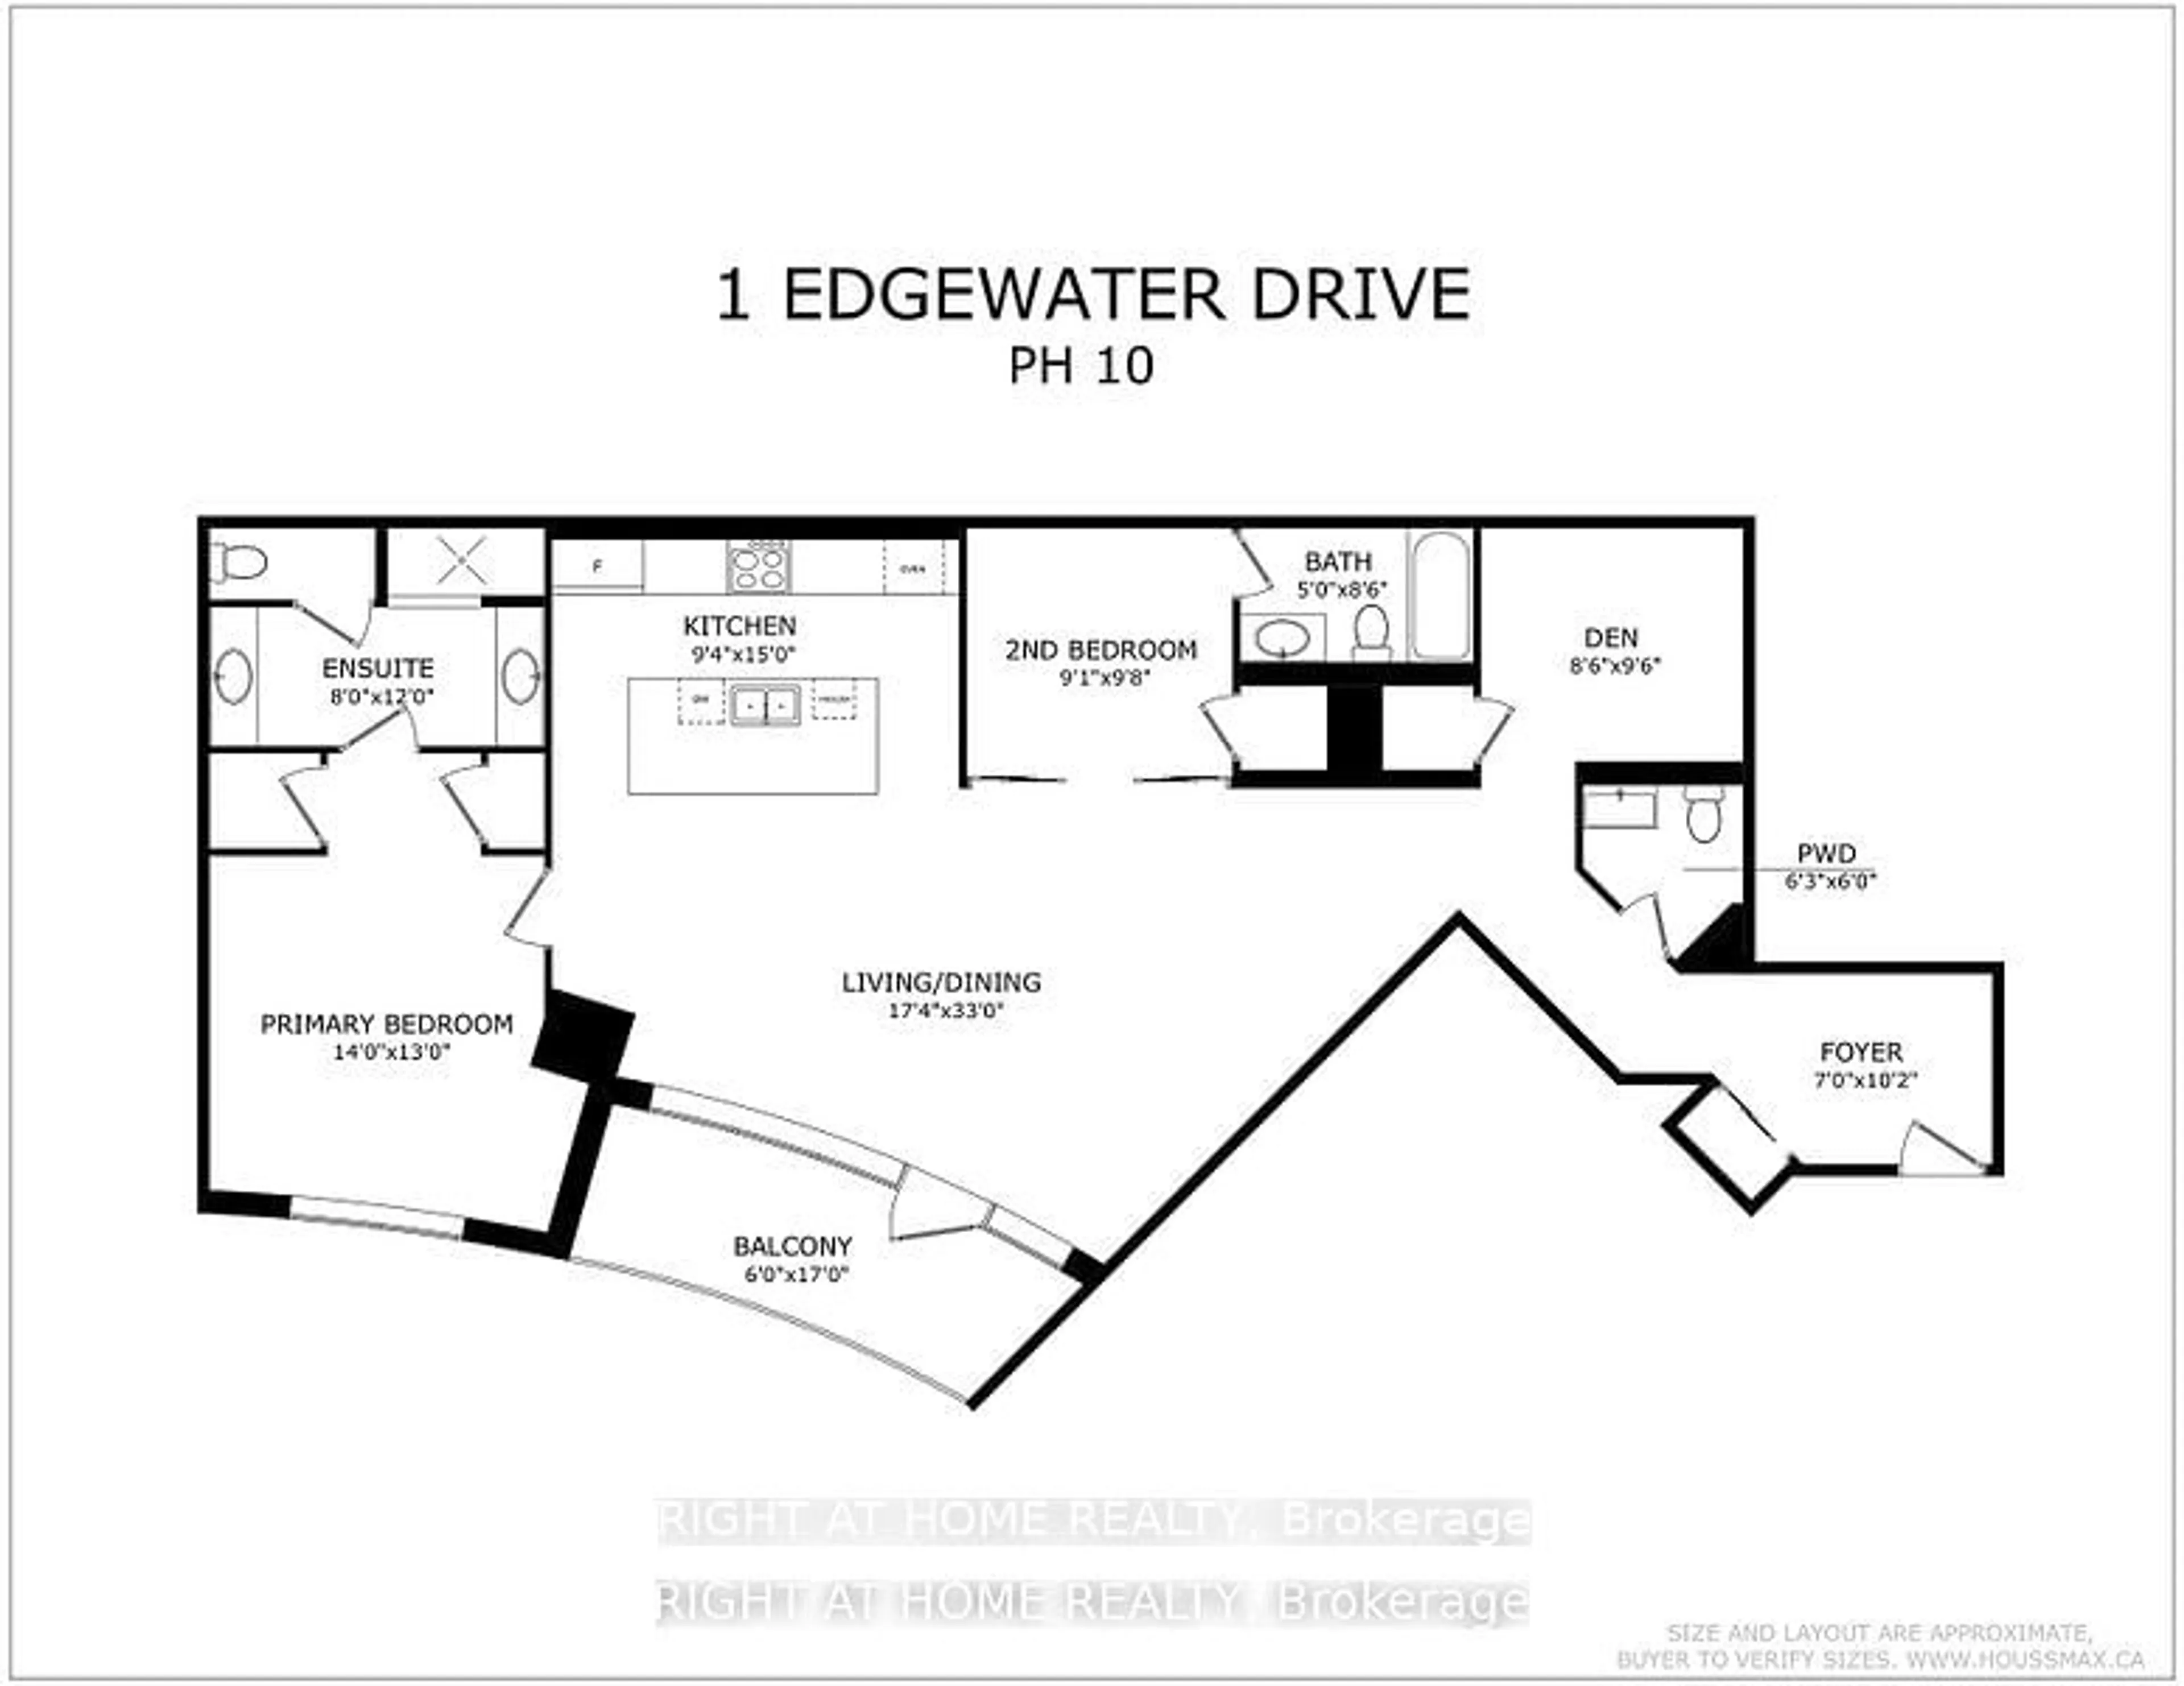 Floor plan for 1 Edgewater Dr #PH10, Toronto Ontario M5A 0L1